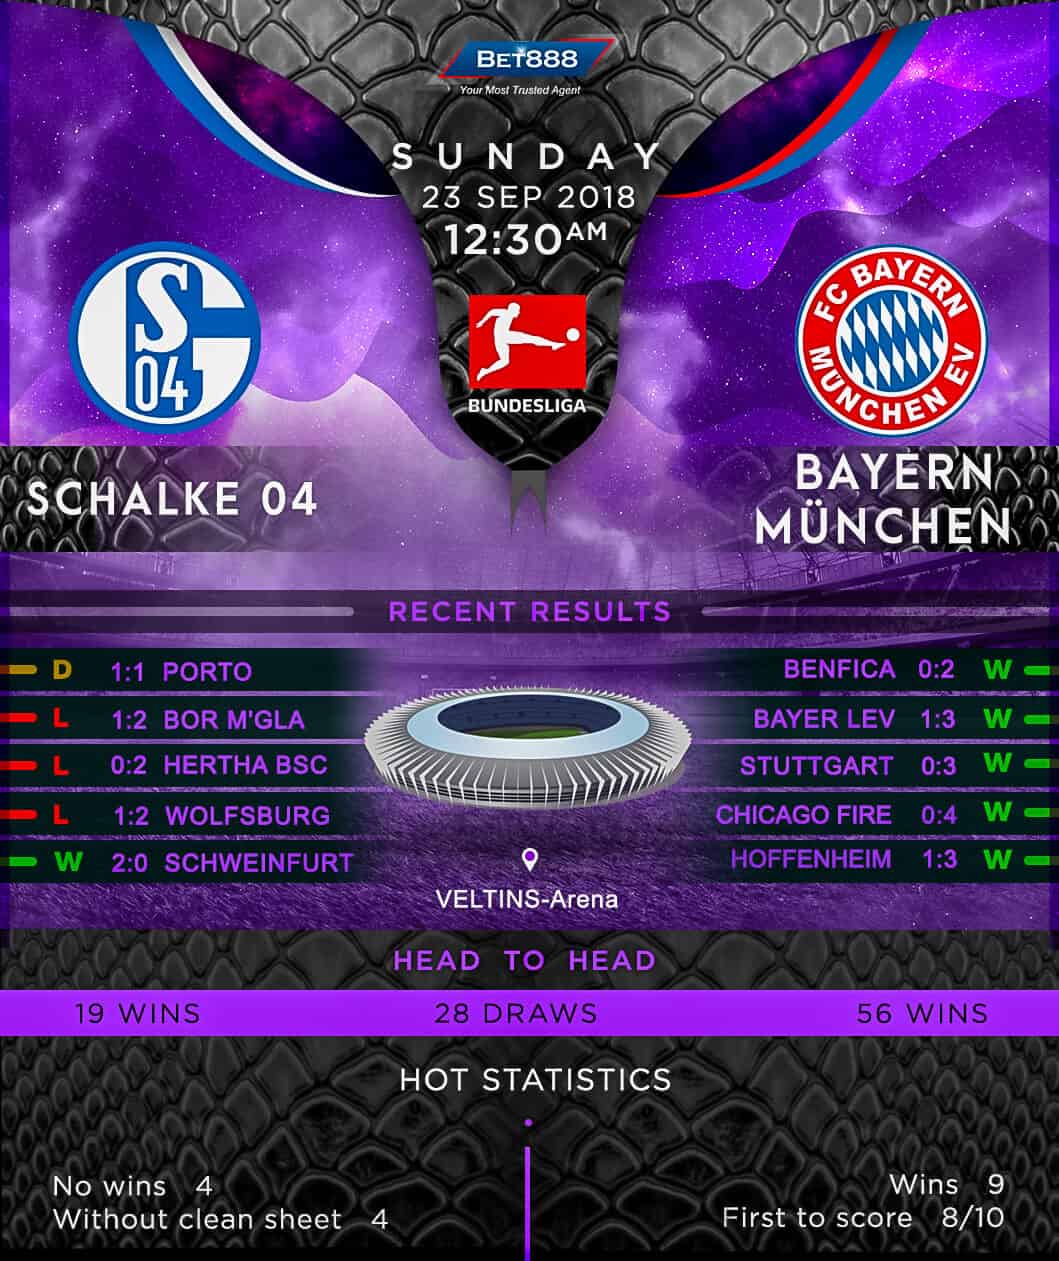 Schalke 04 vs Bayern Munich 23/09/18